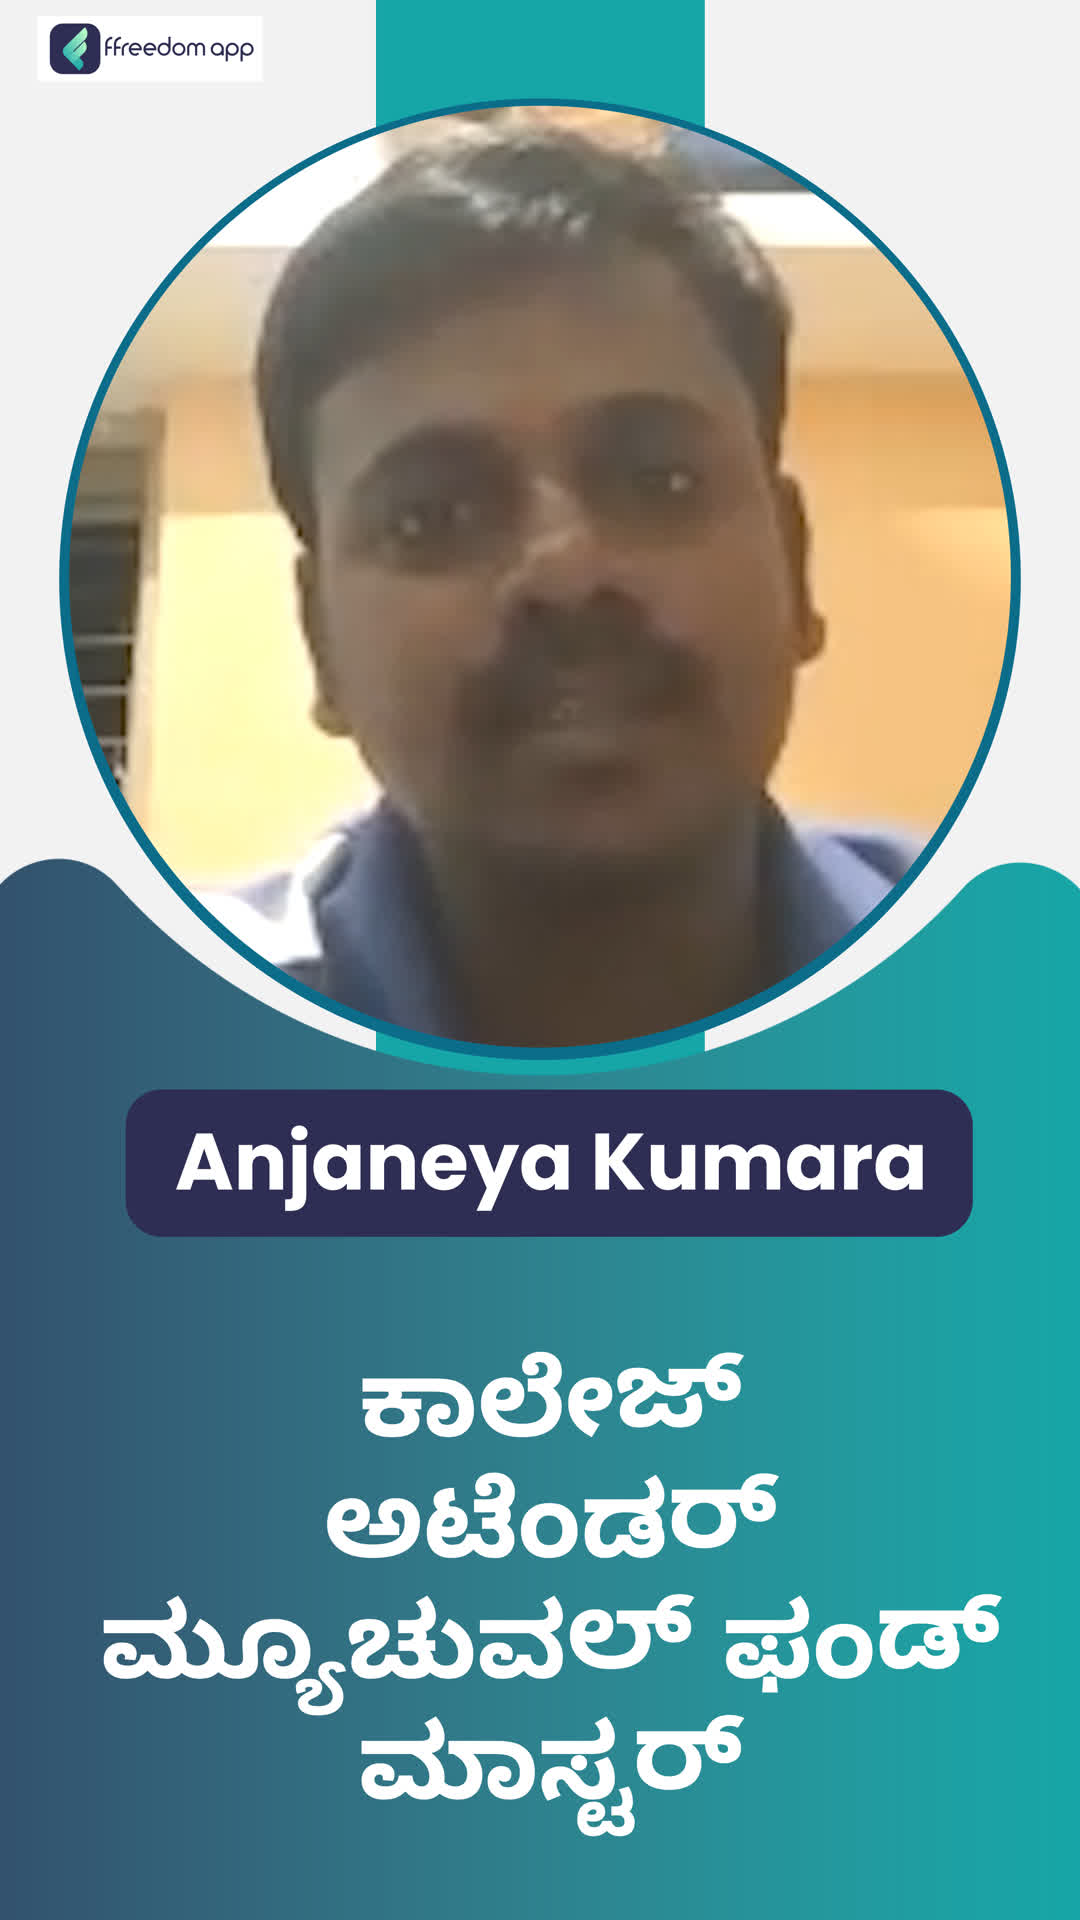 Ramanjaneya N k's Honest Review of ffreedom app - Chikballapur ,Karnataka